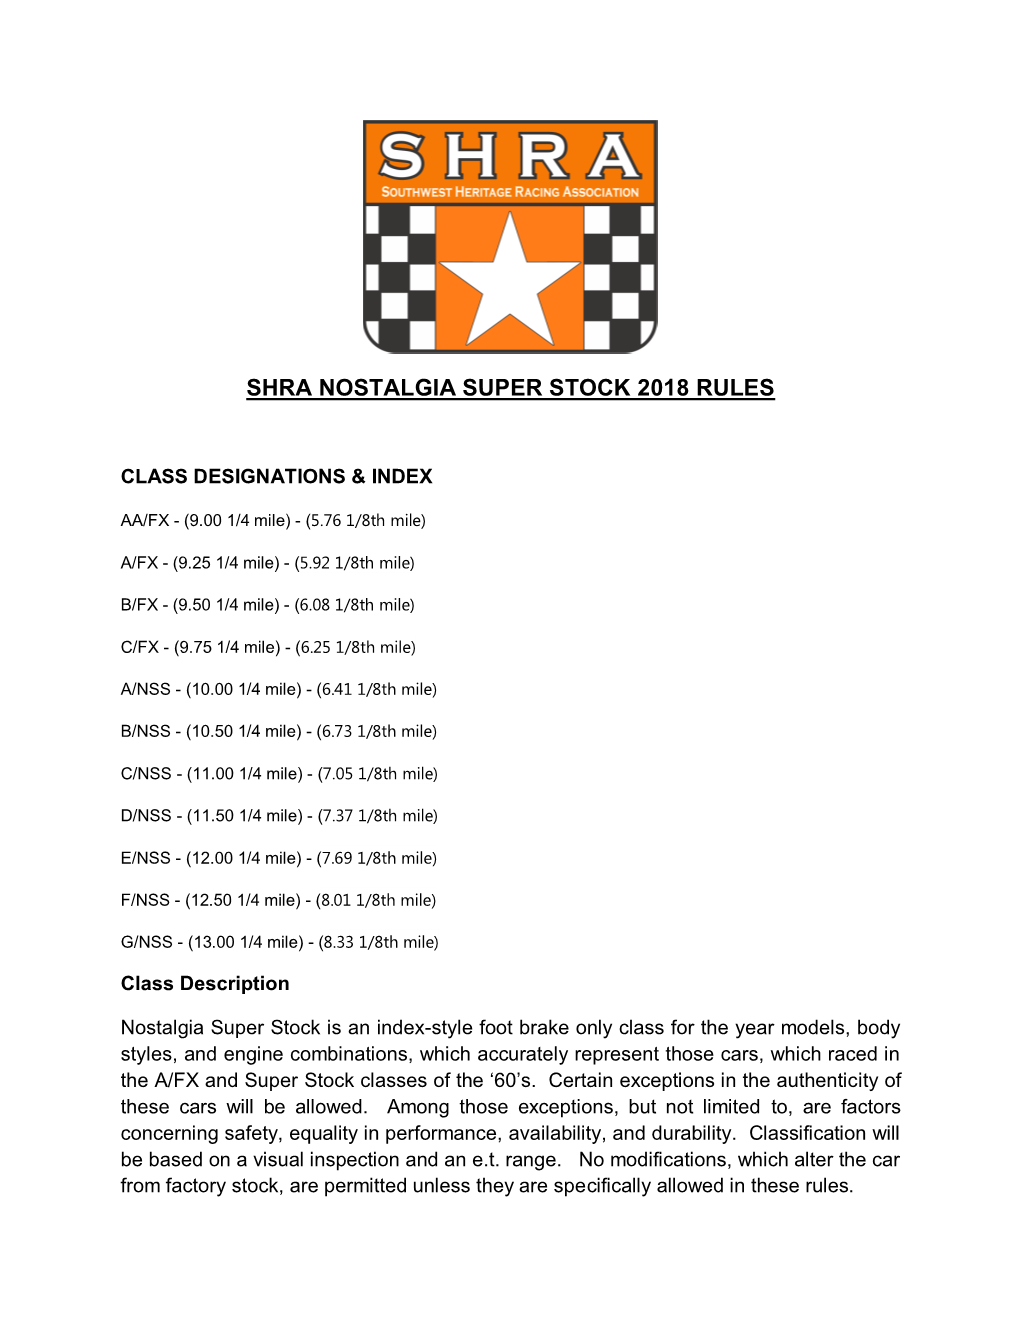 Shra Nostalgia Super Stock 2018 Rules